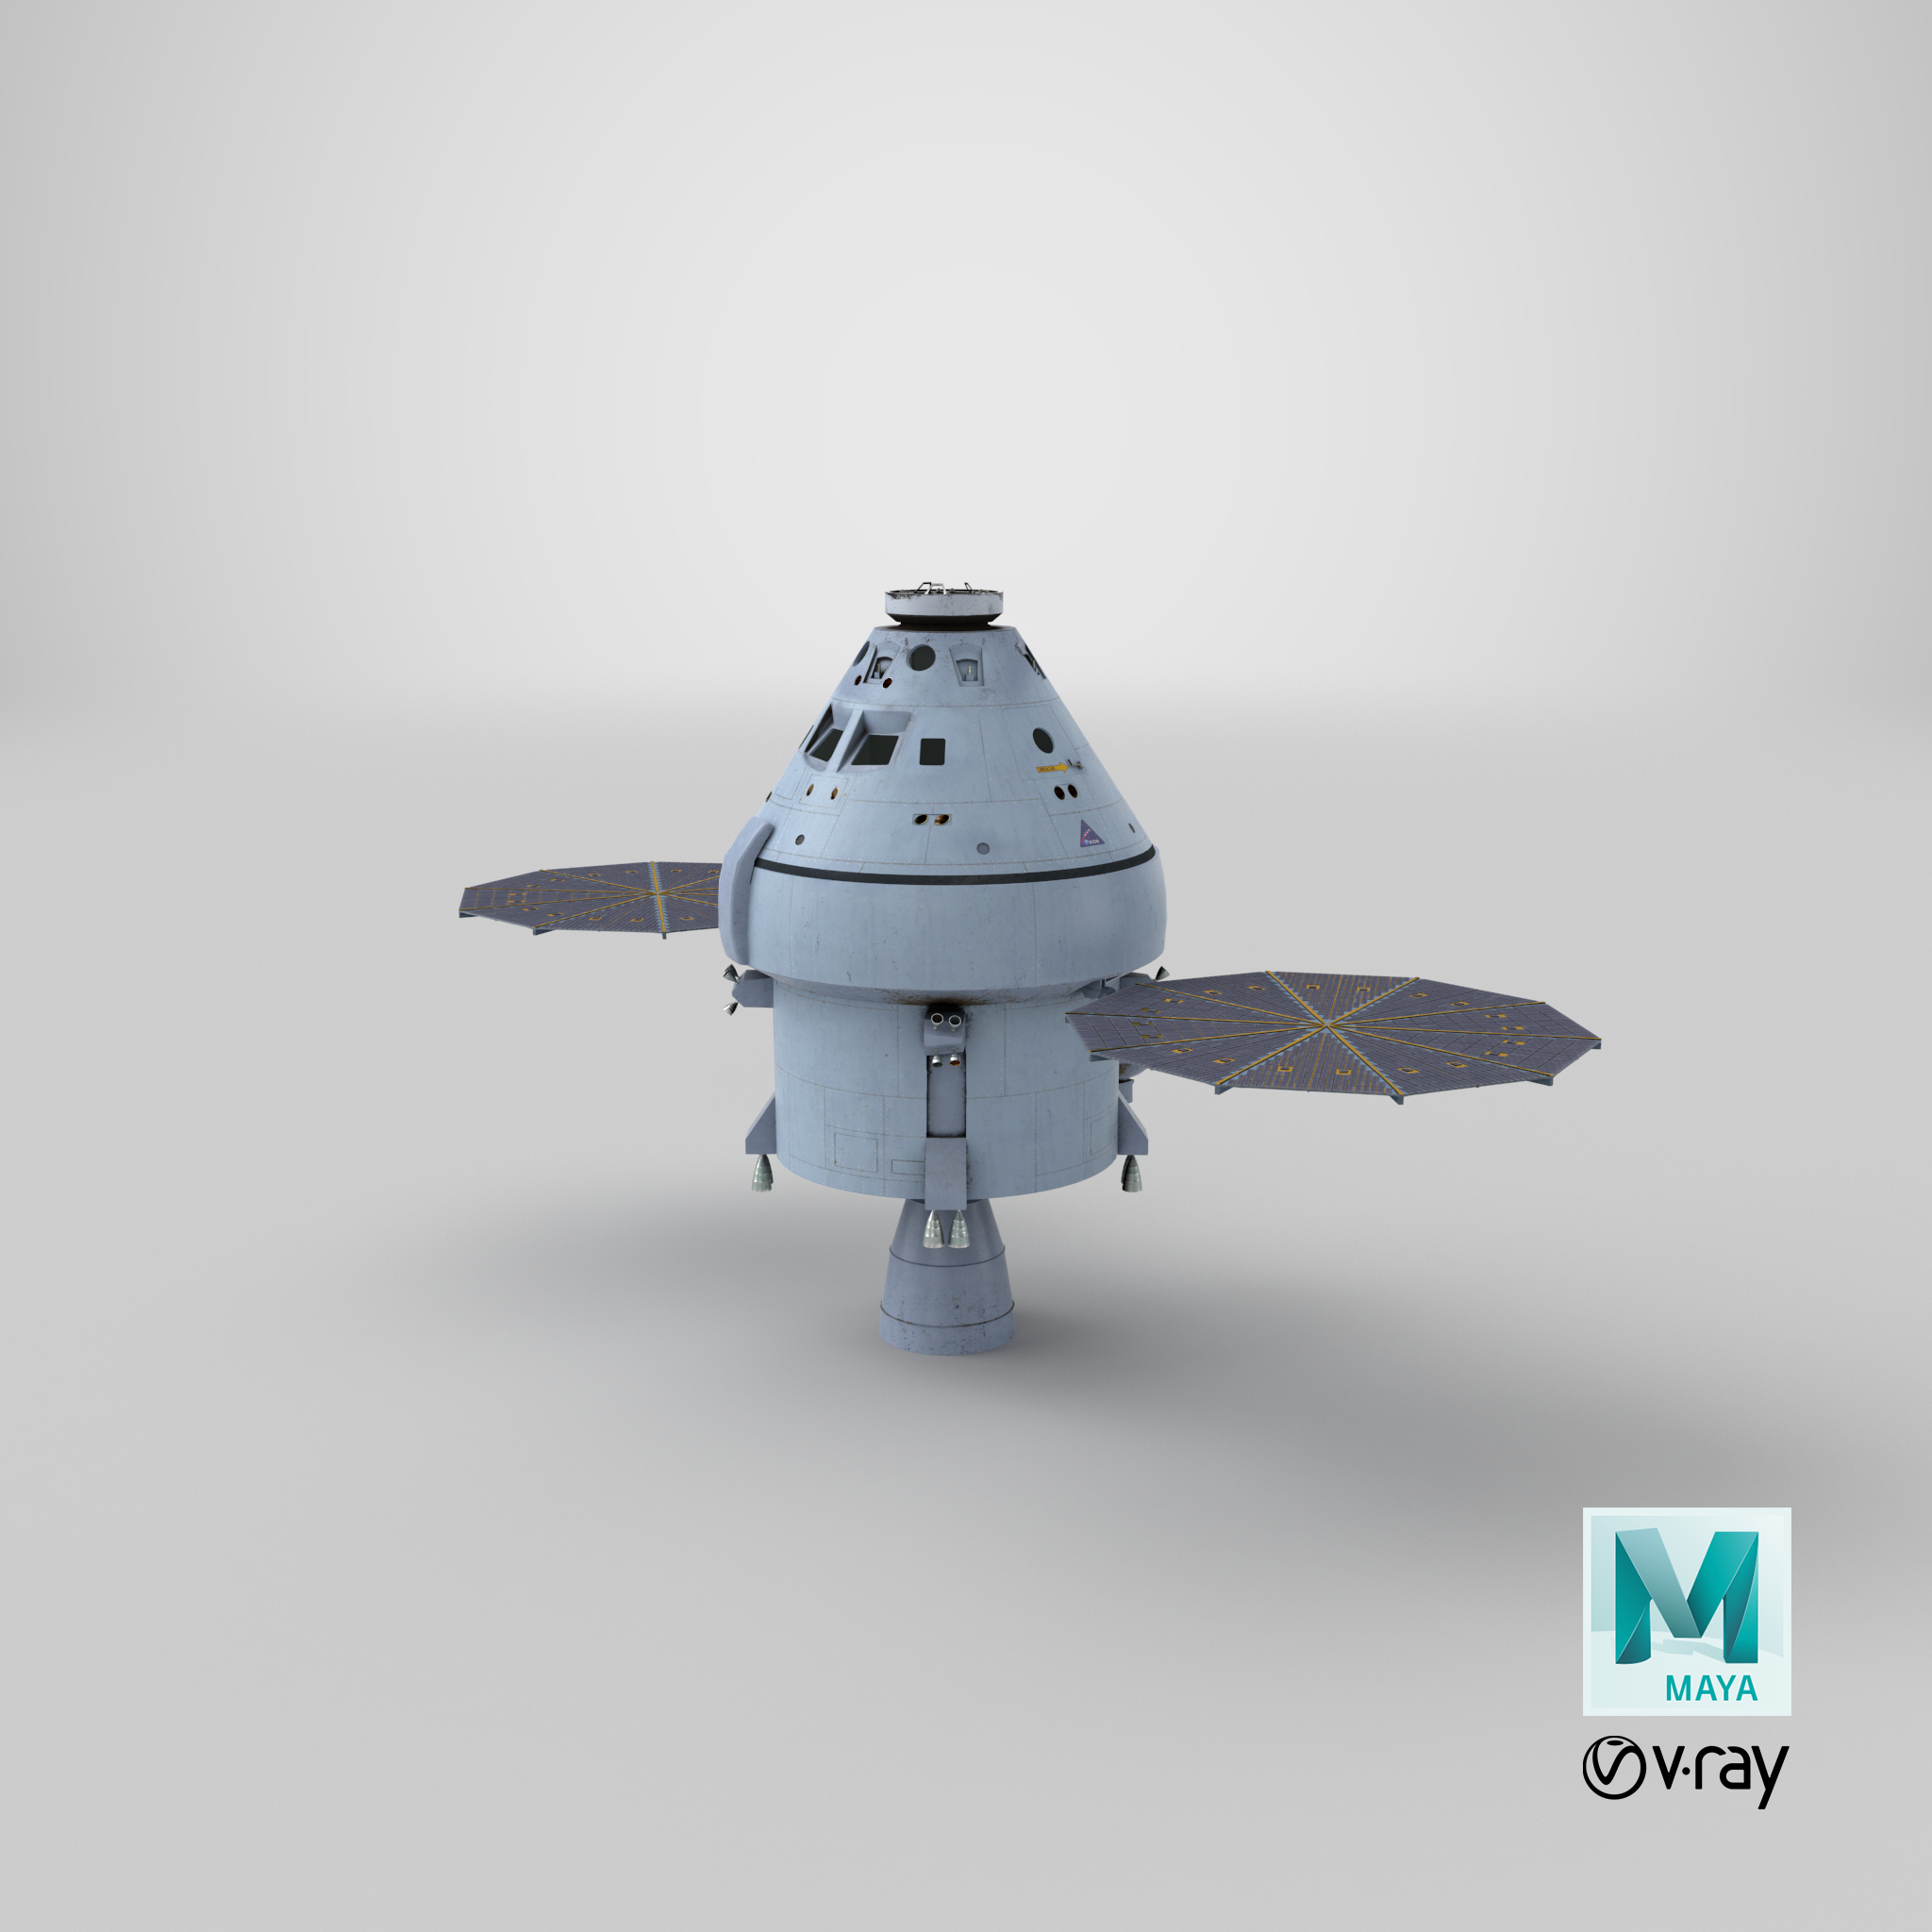 orion space capsule 3d model